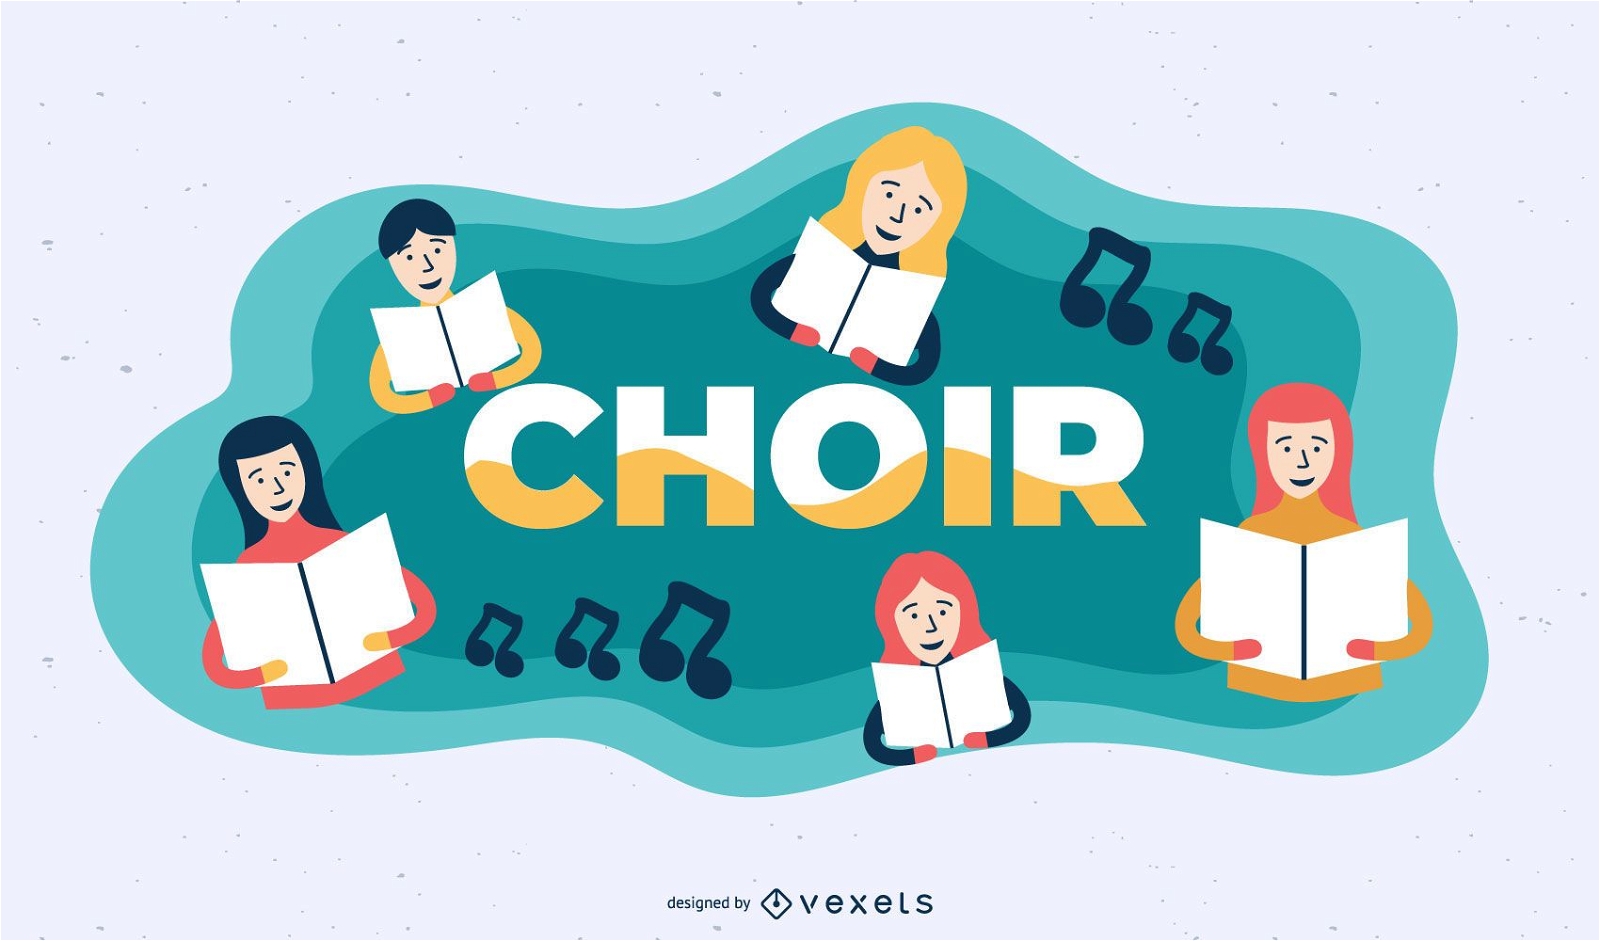 Choir subject illustration